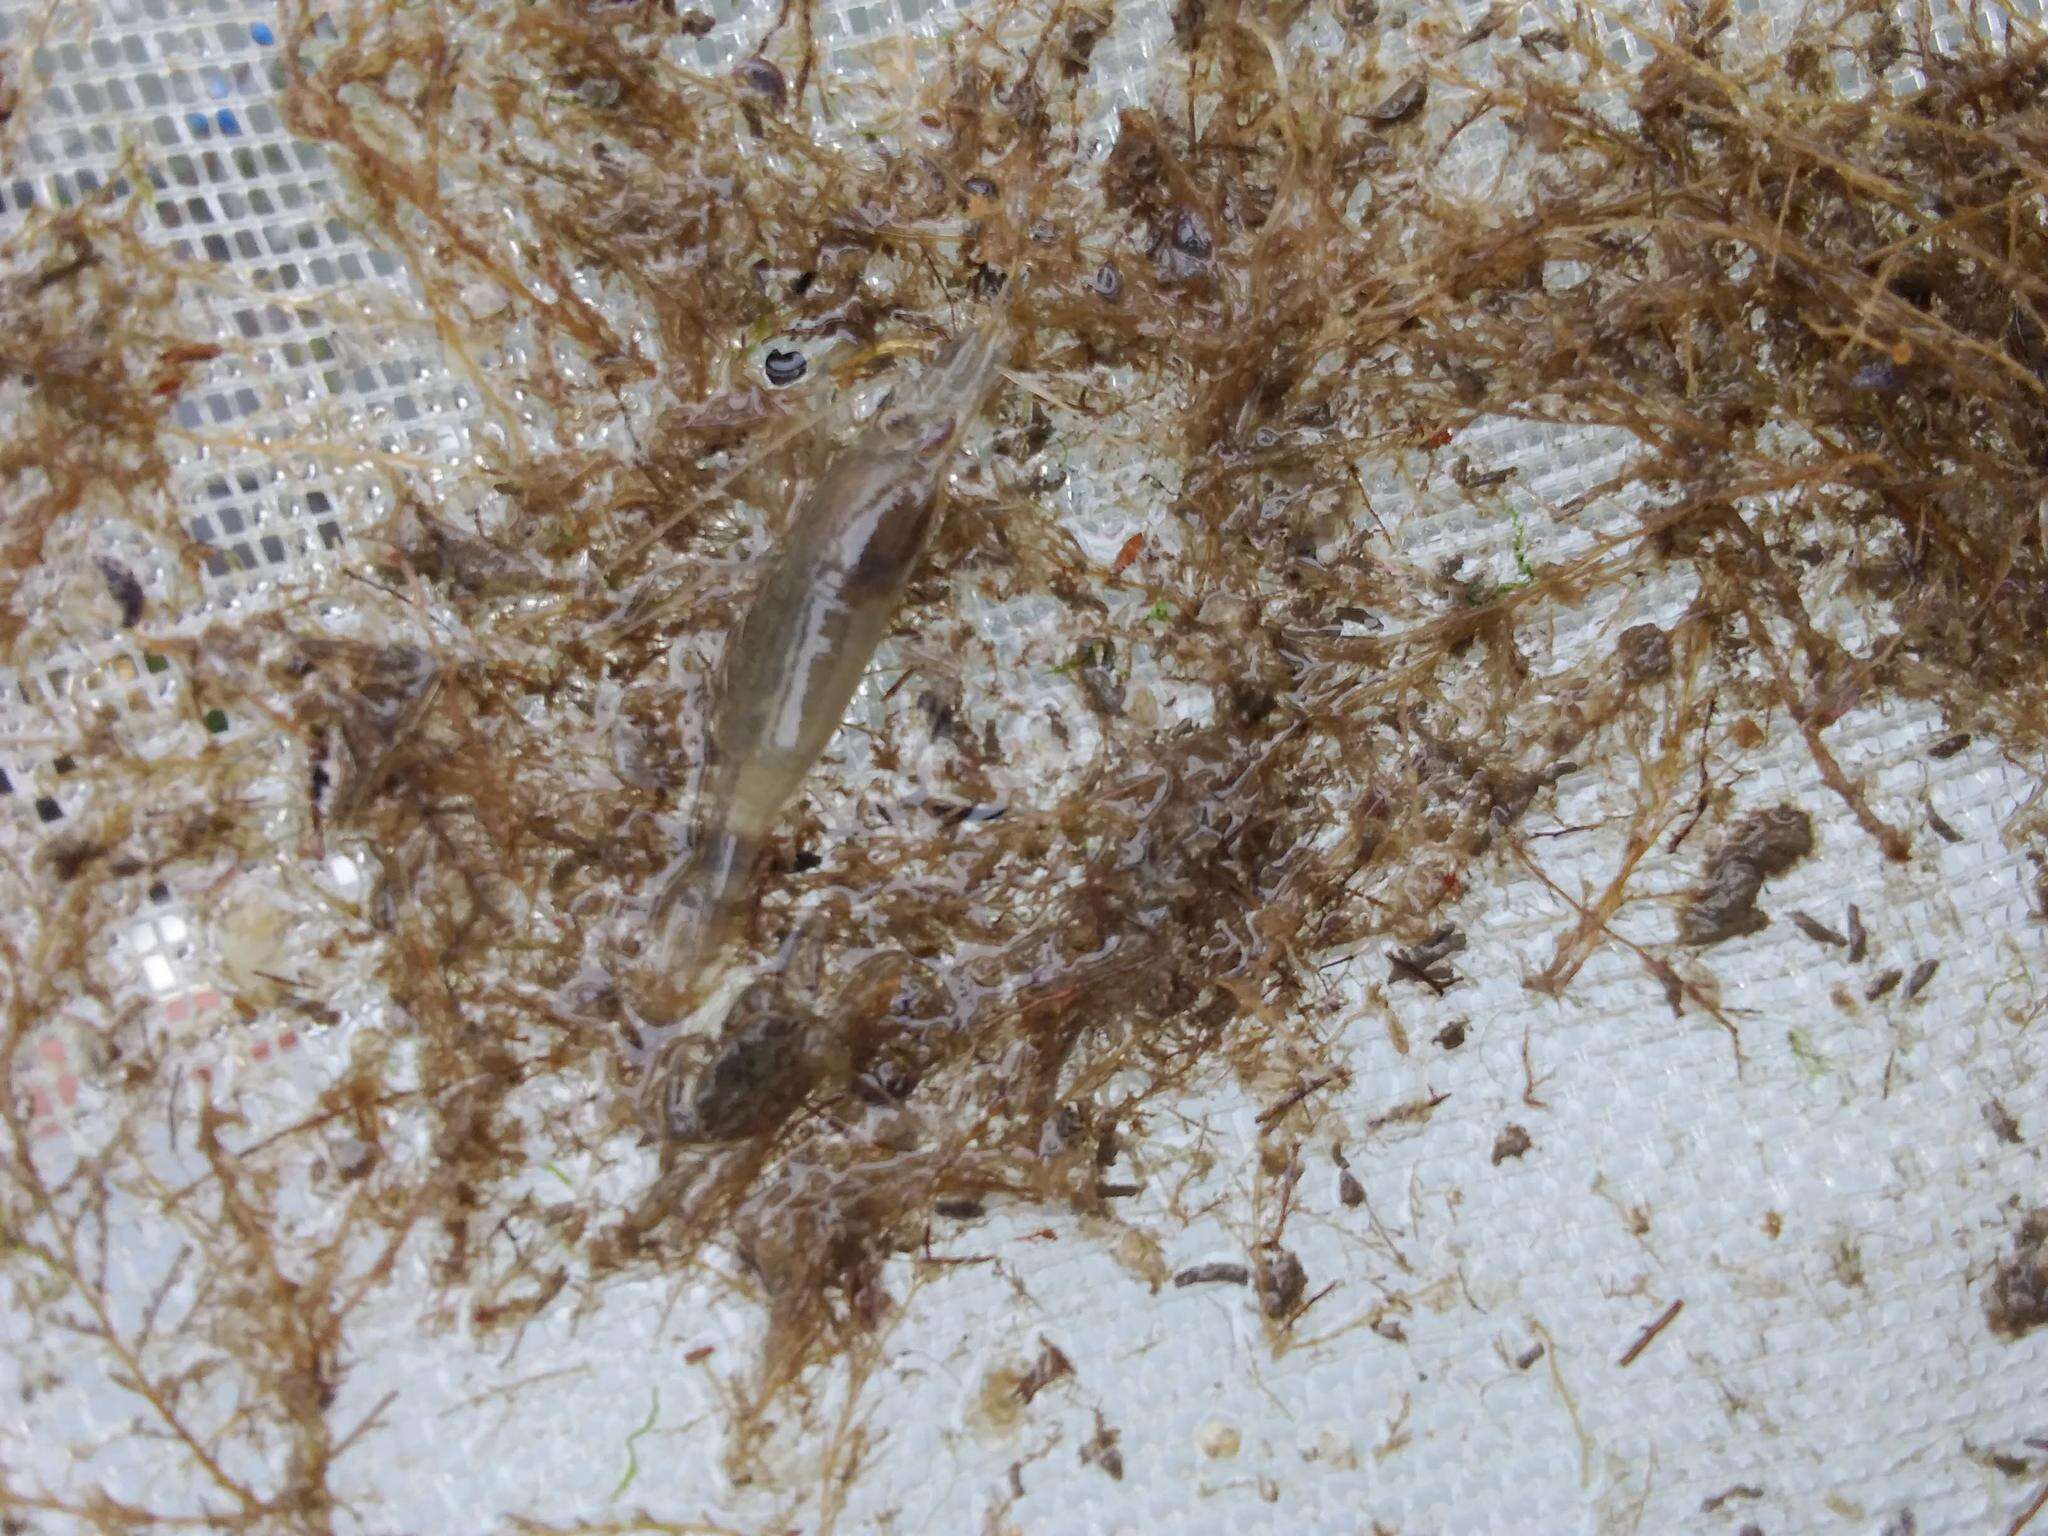 Image of common grass shrimp